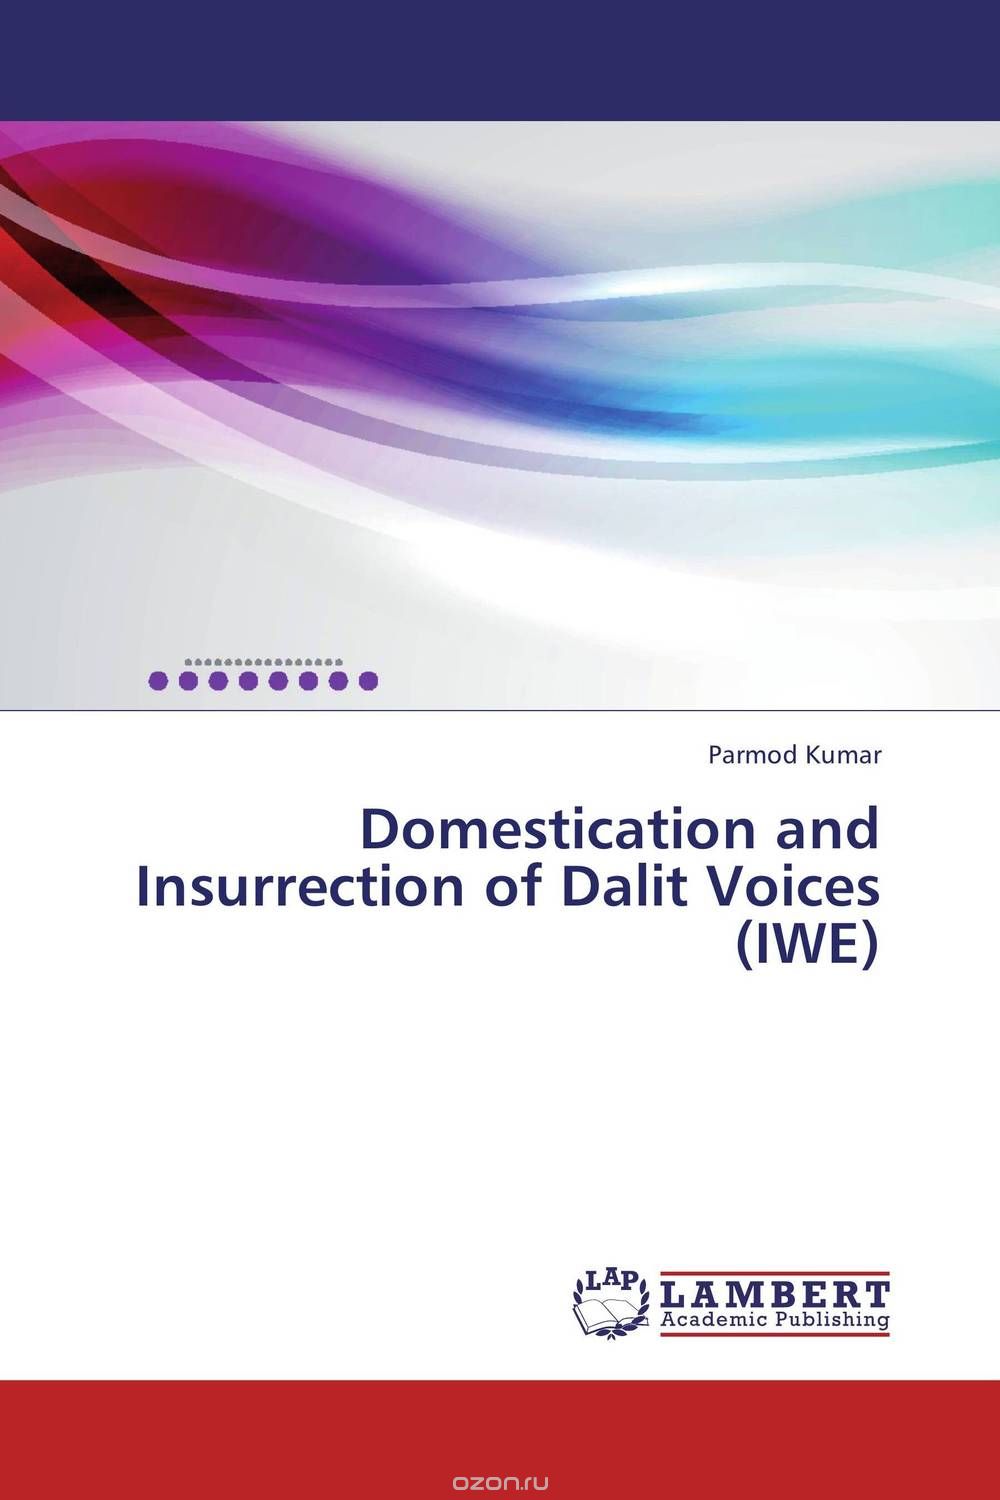 Скачать книгу "Domestication and Insurrection of Dalit Voices  (IWE)"